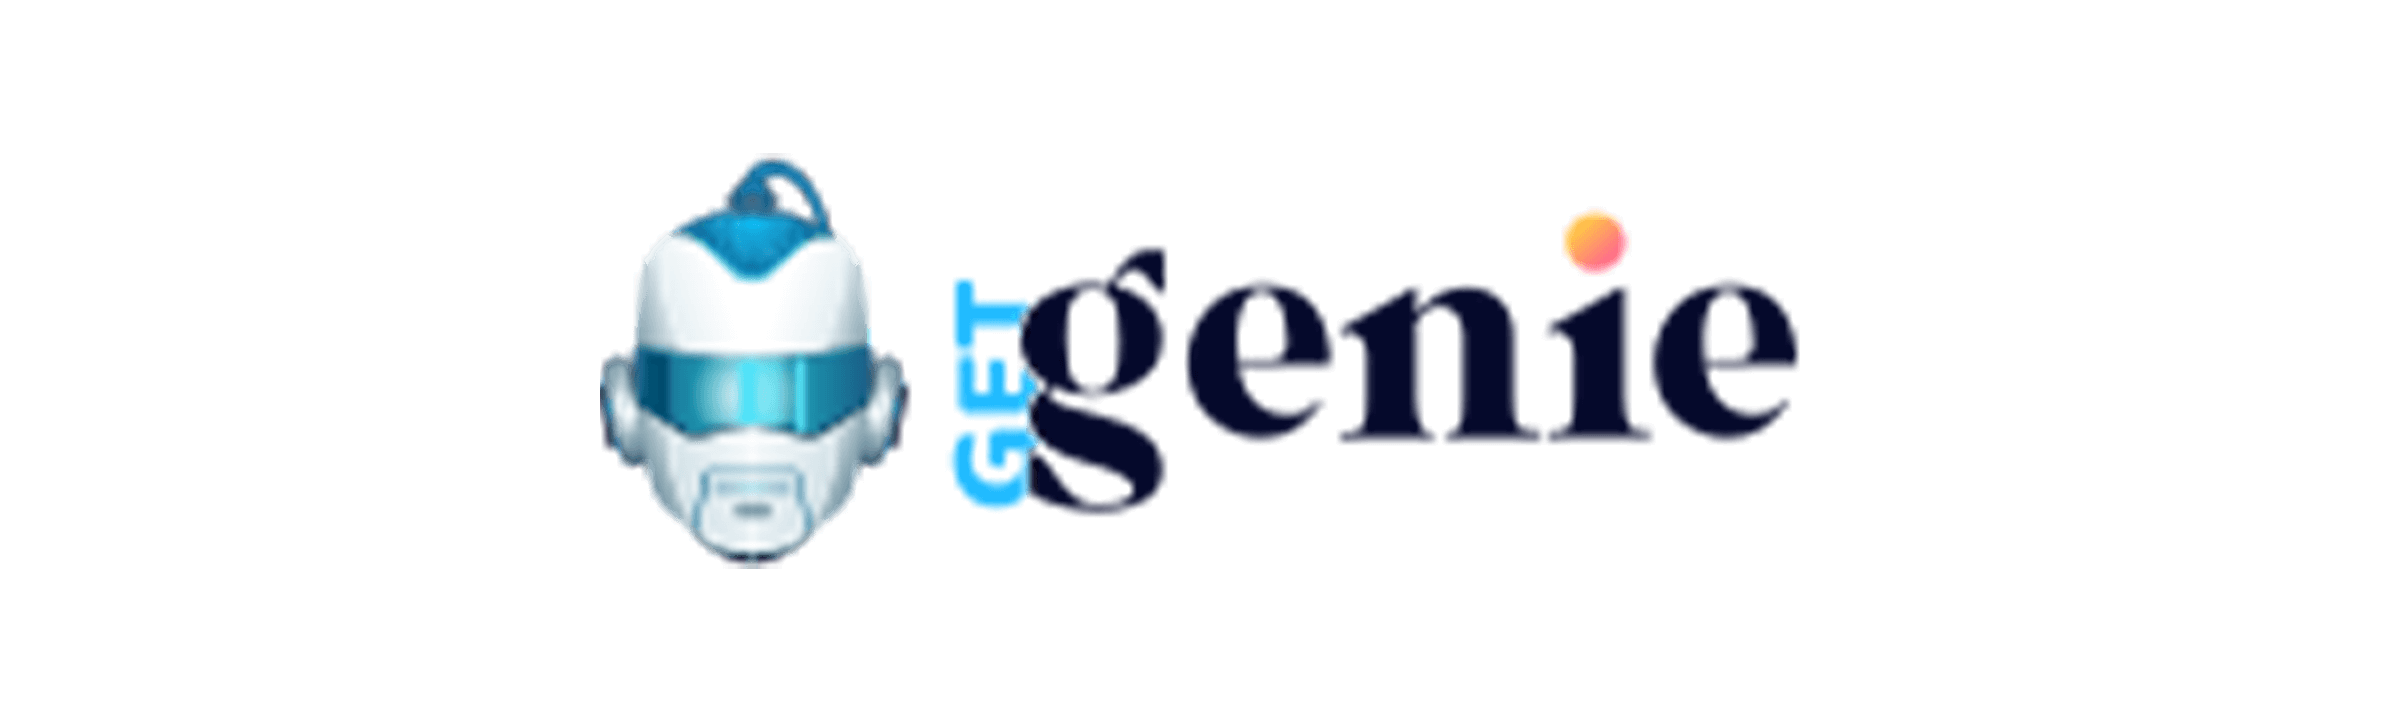 GetGenie logo